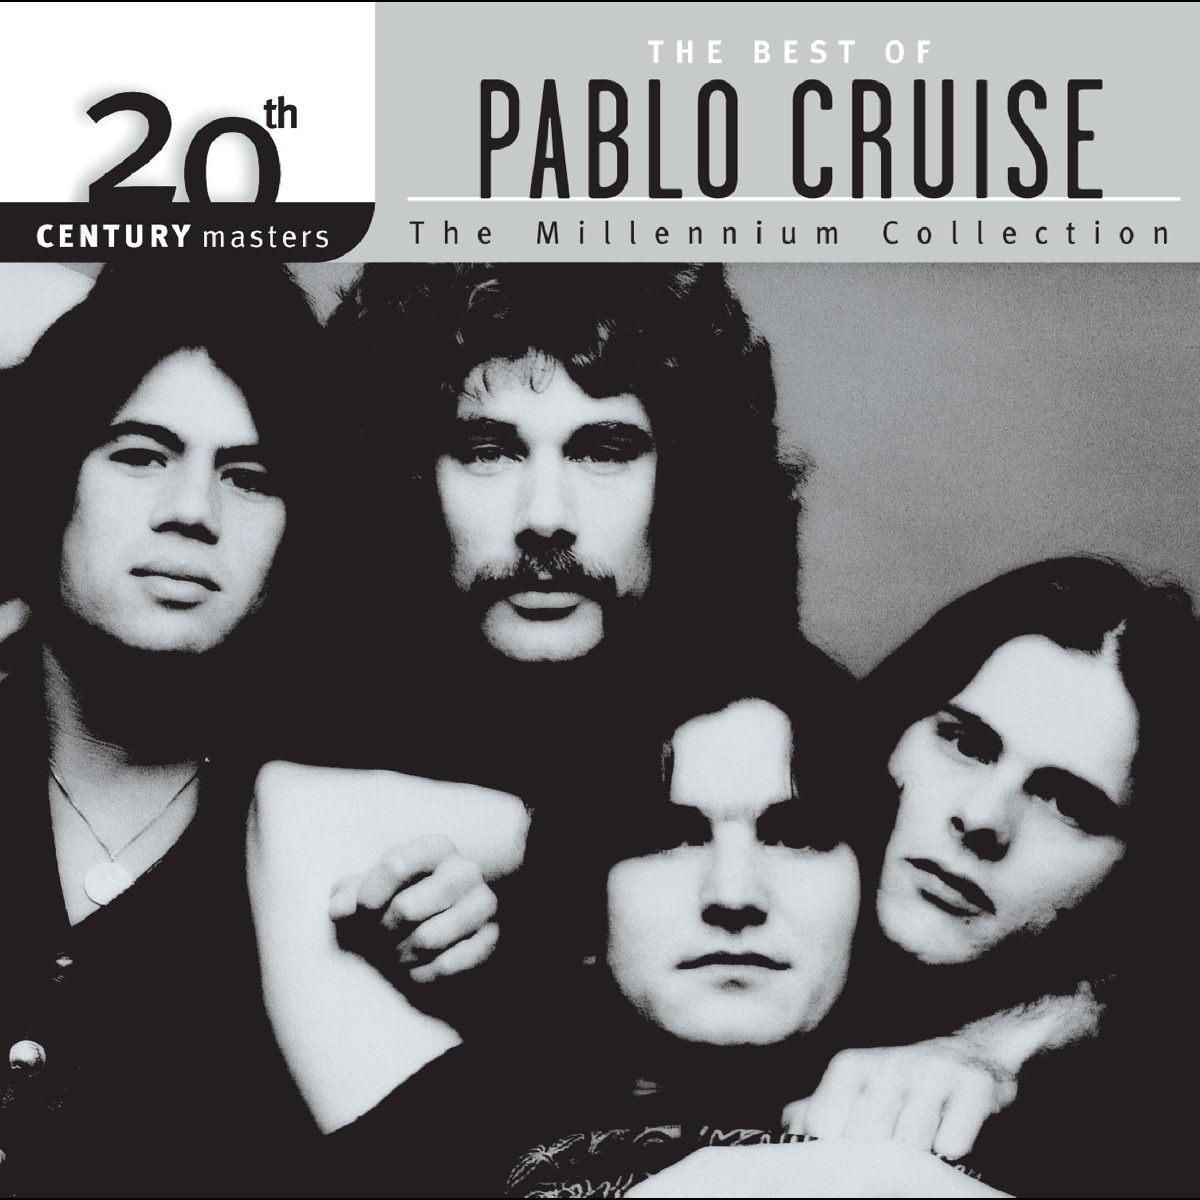 pablo cruise albums ranked